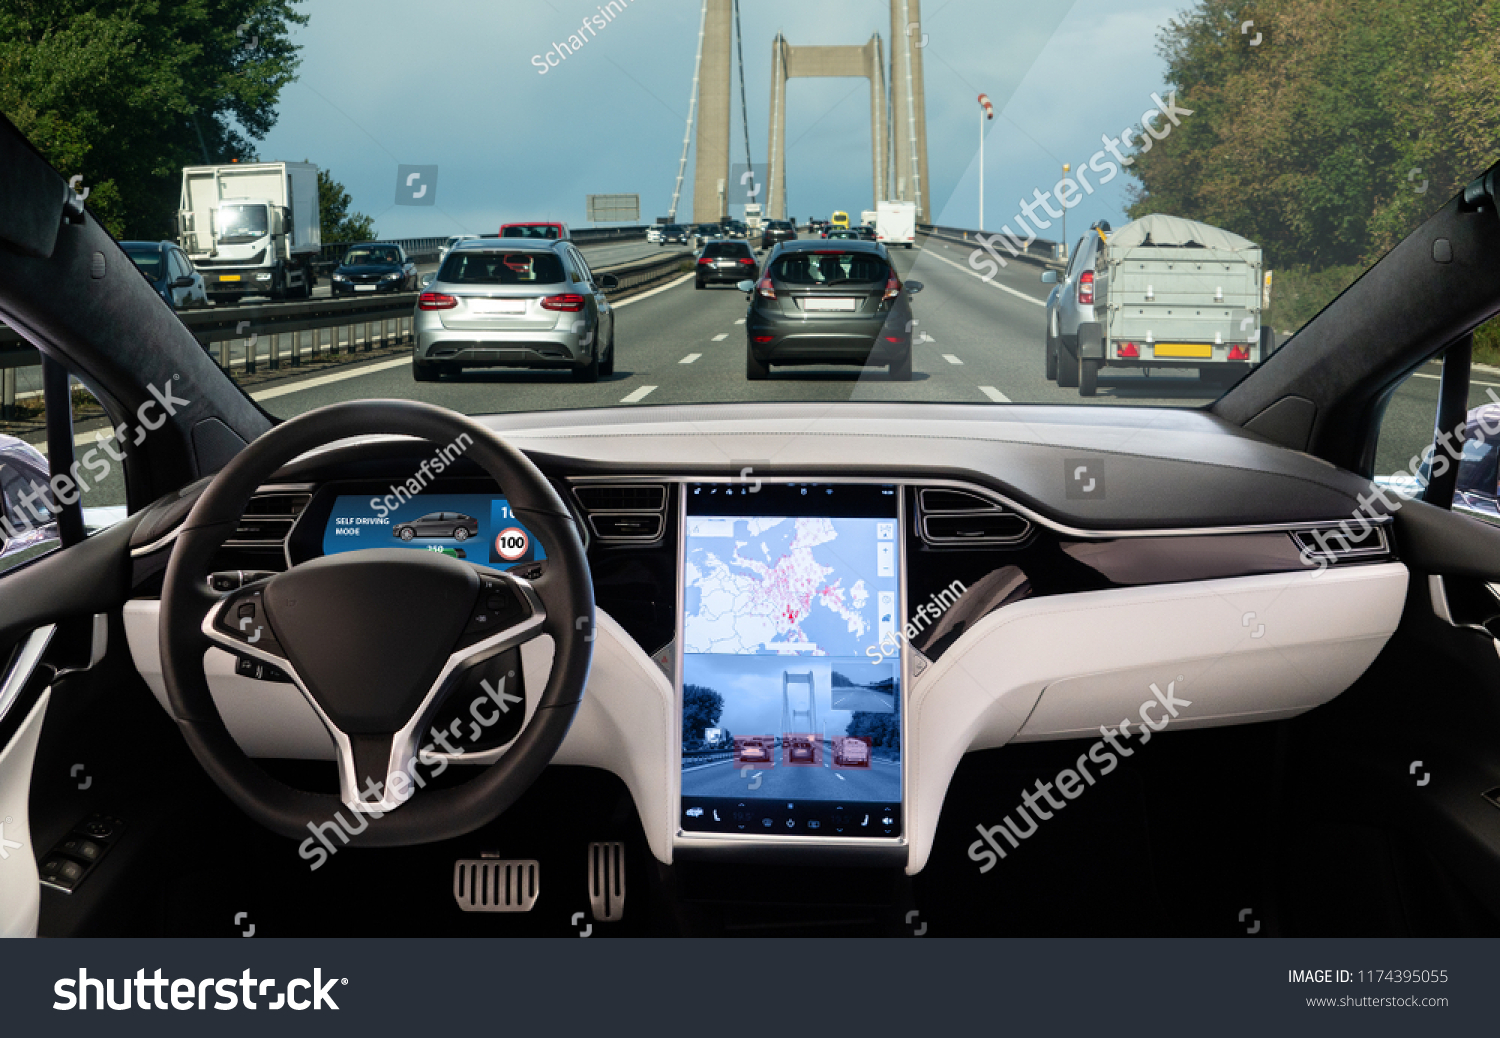 Self driving car on a road. Autonomous vehicle. Inside view. #1174395055